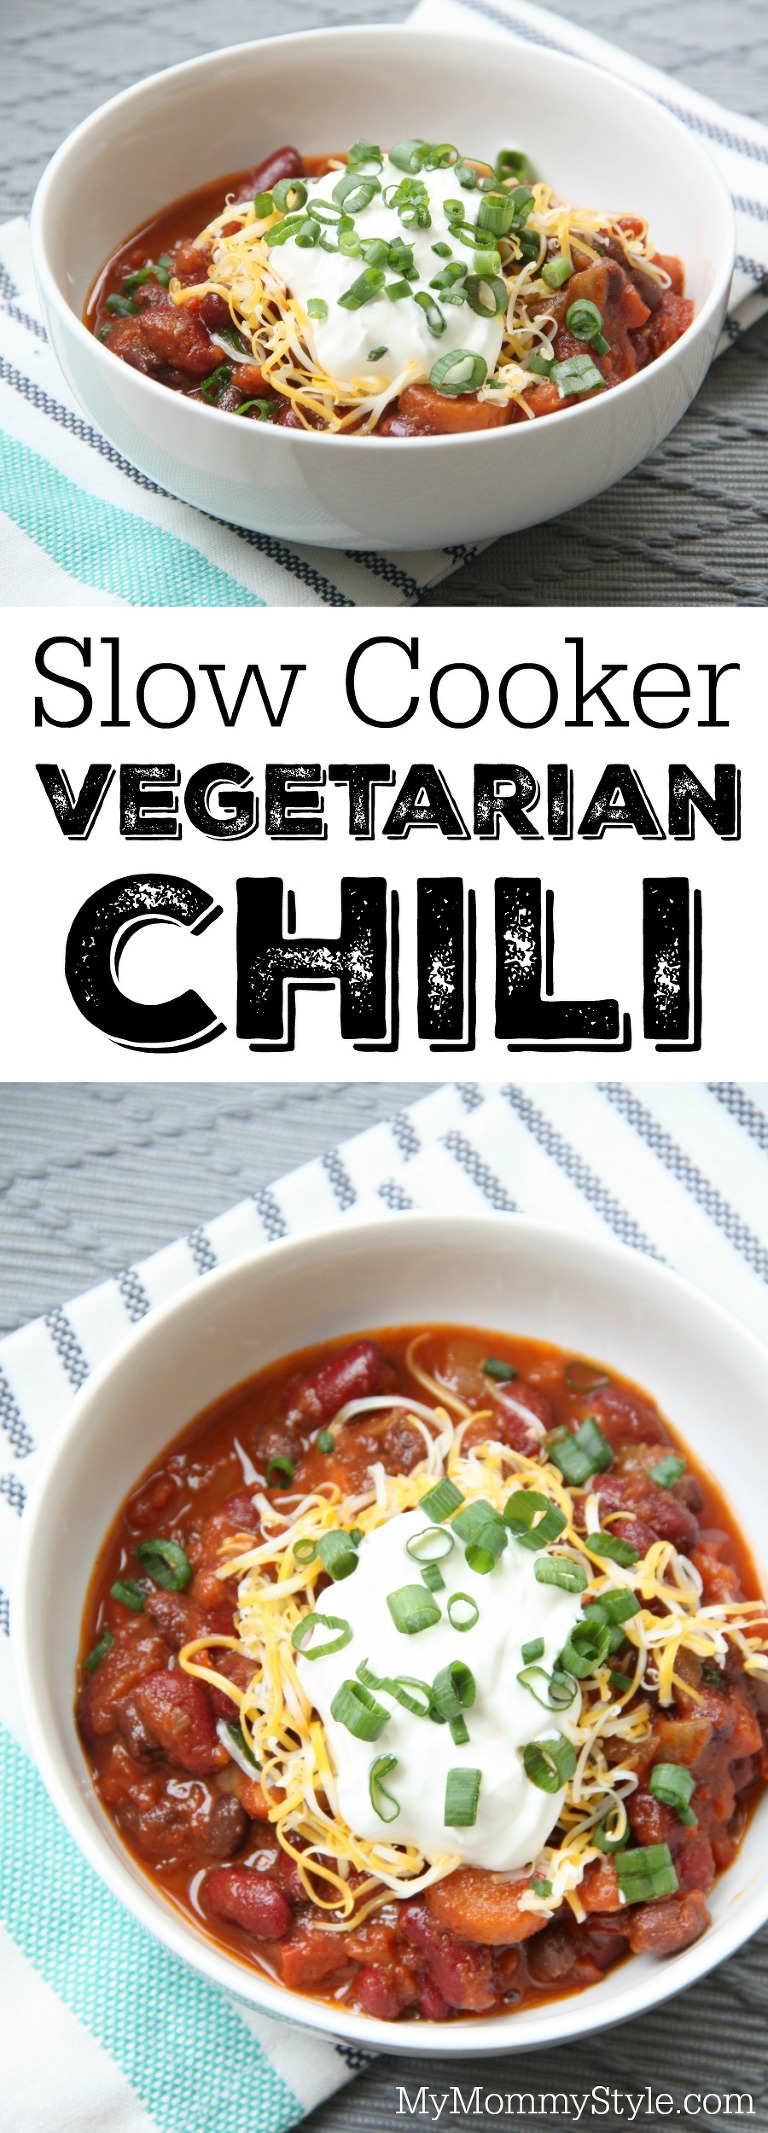 Slow cooker vegetarian chili